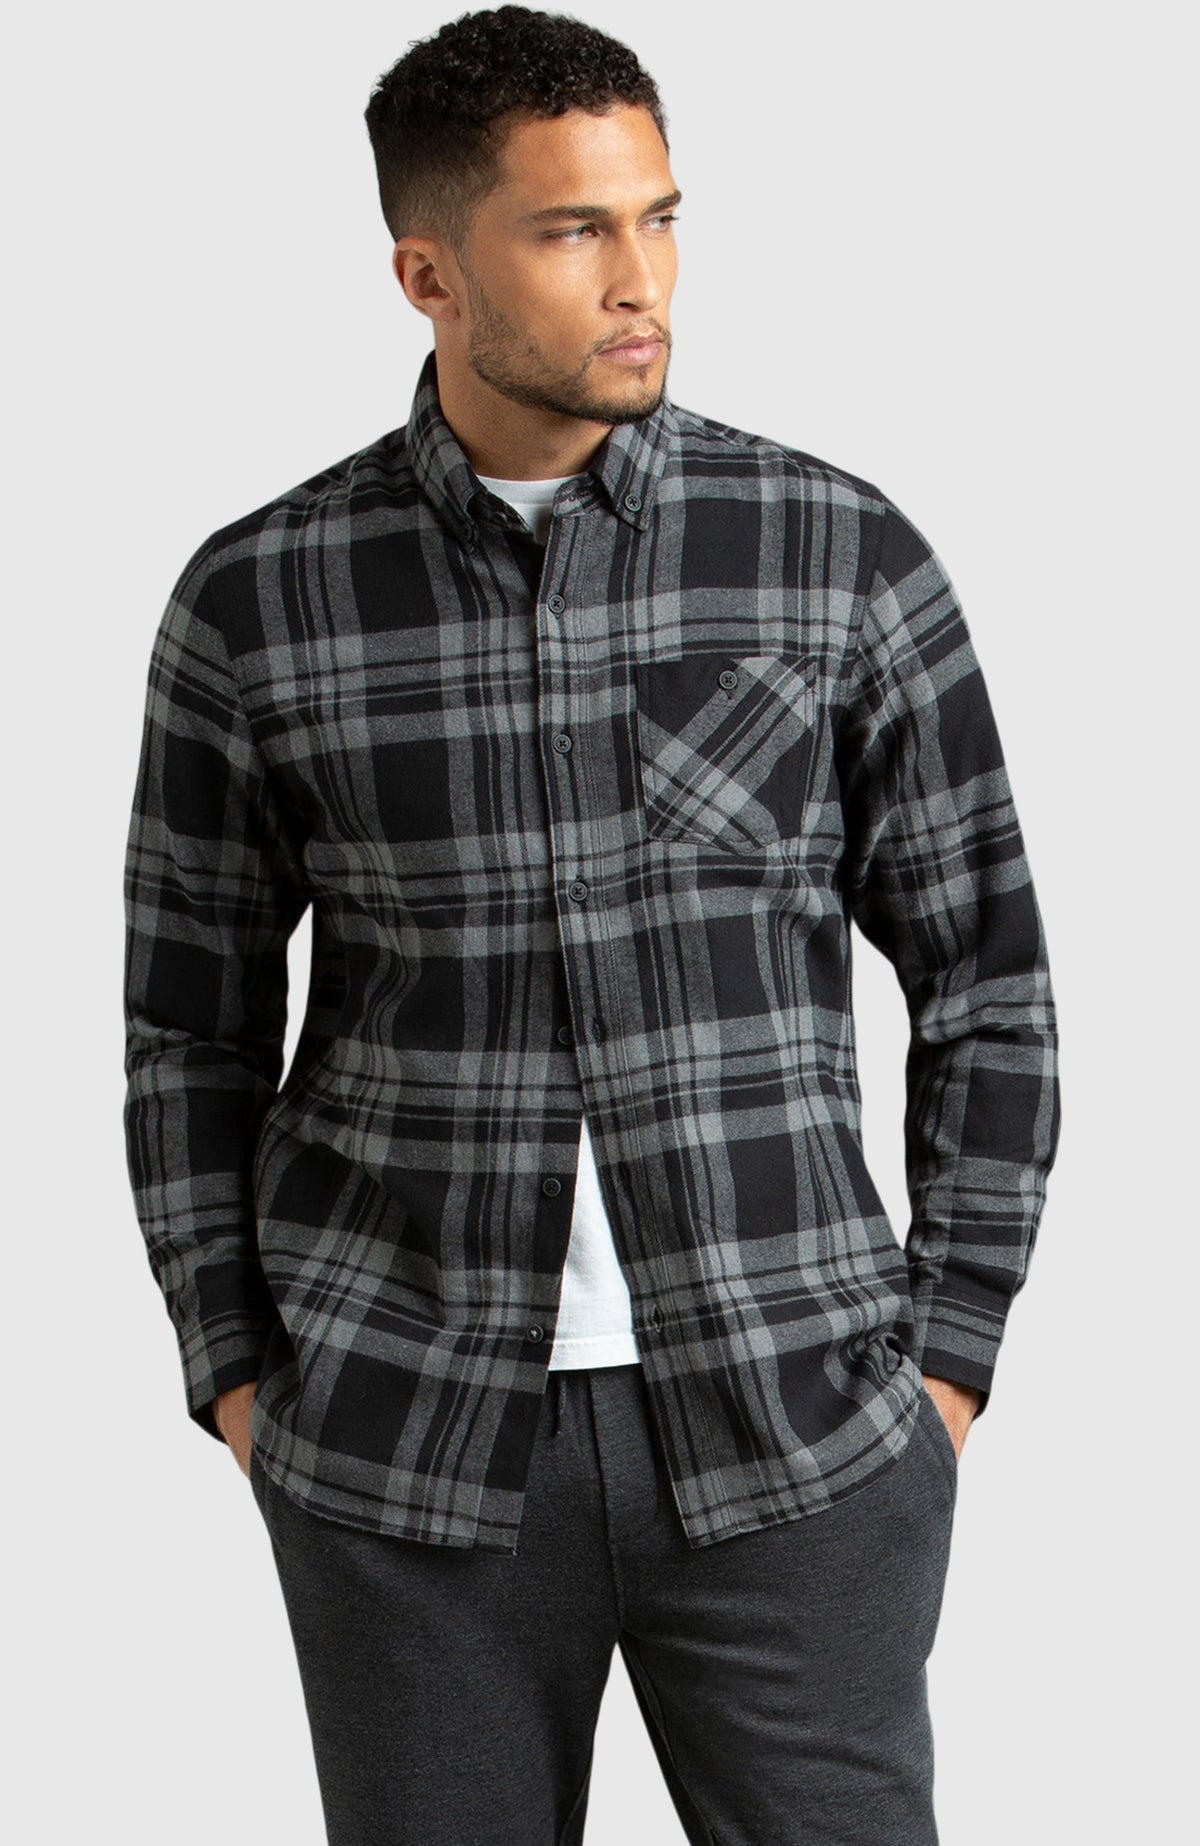 Grey & Black Plaid Flannel Shirt for Men - Front